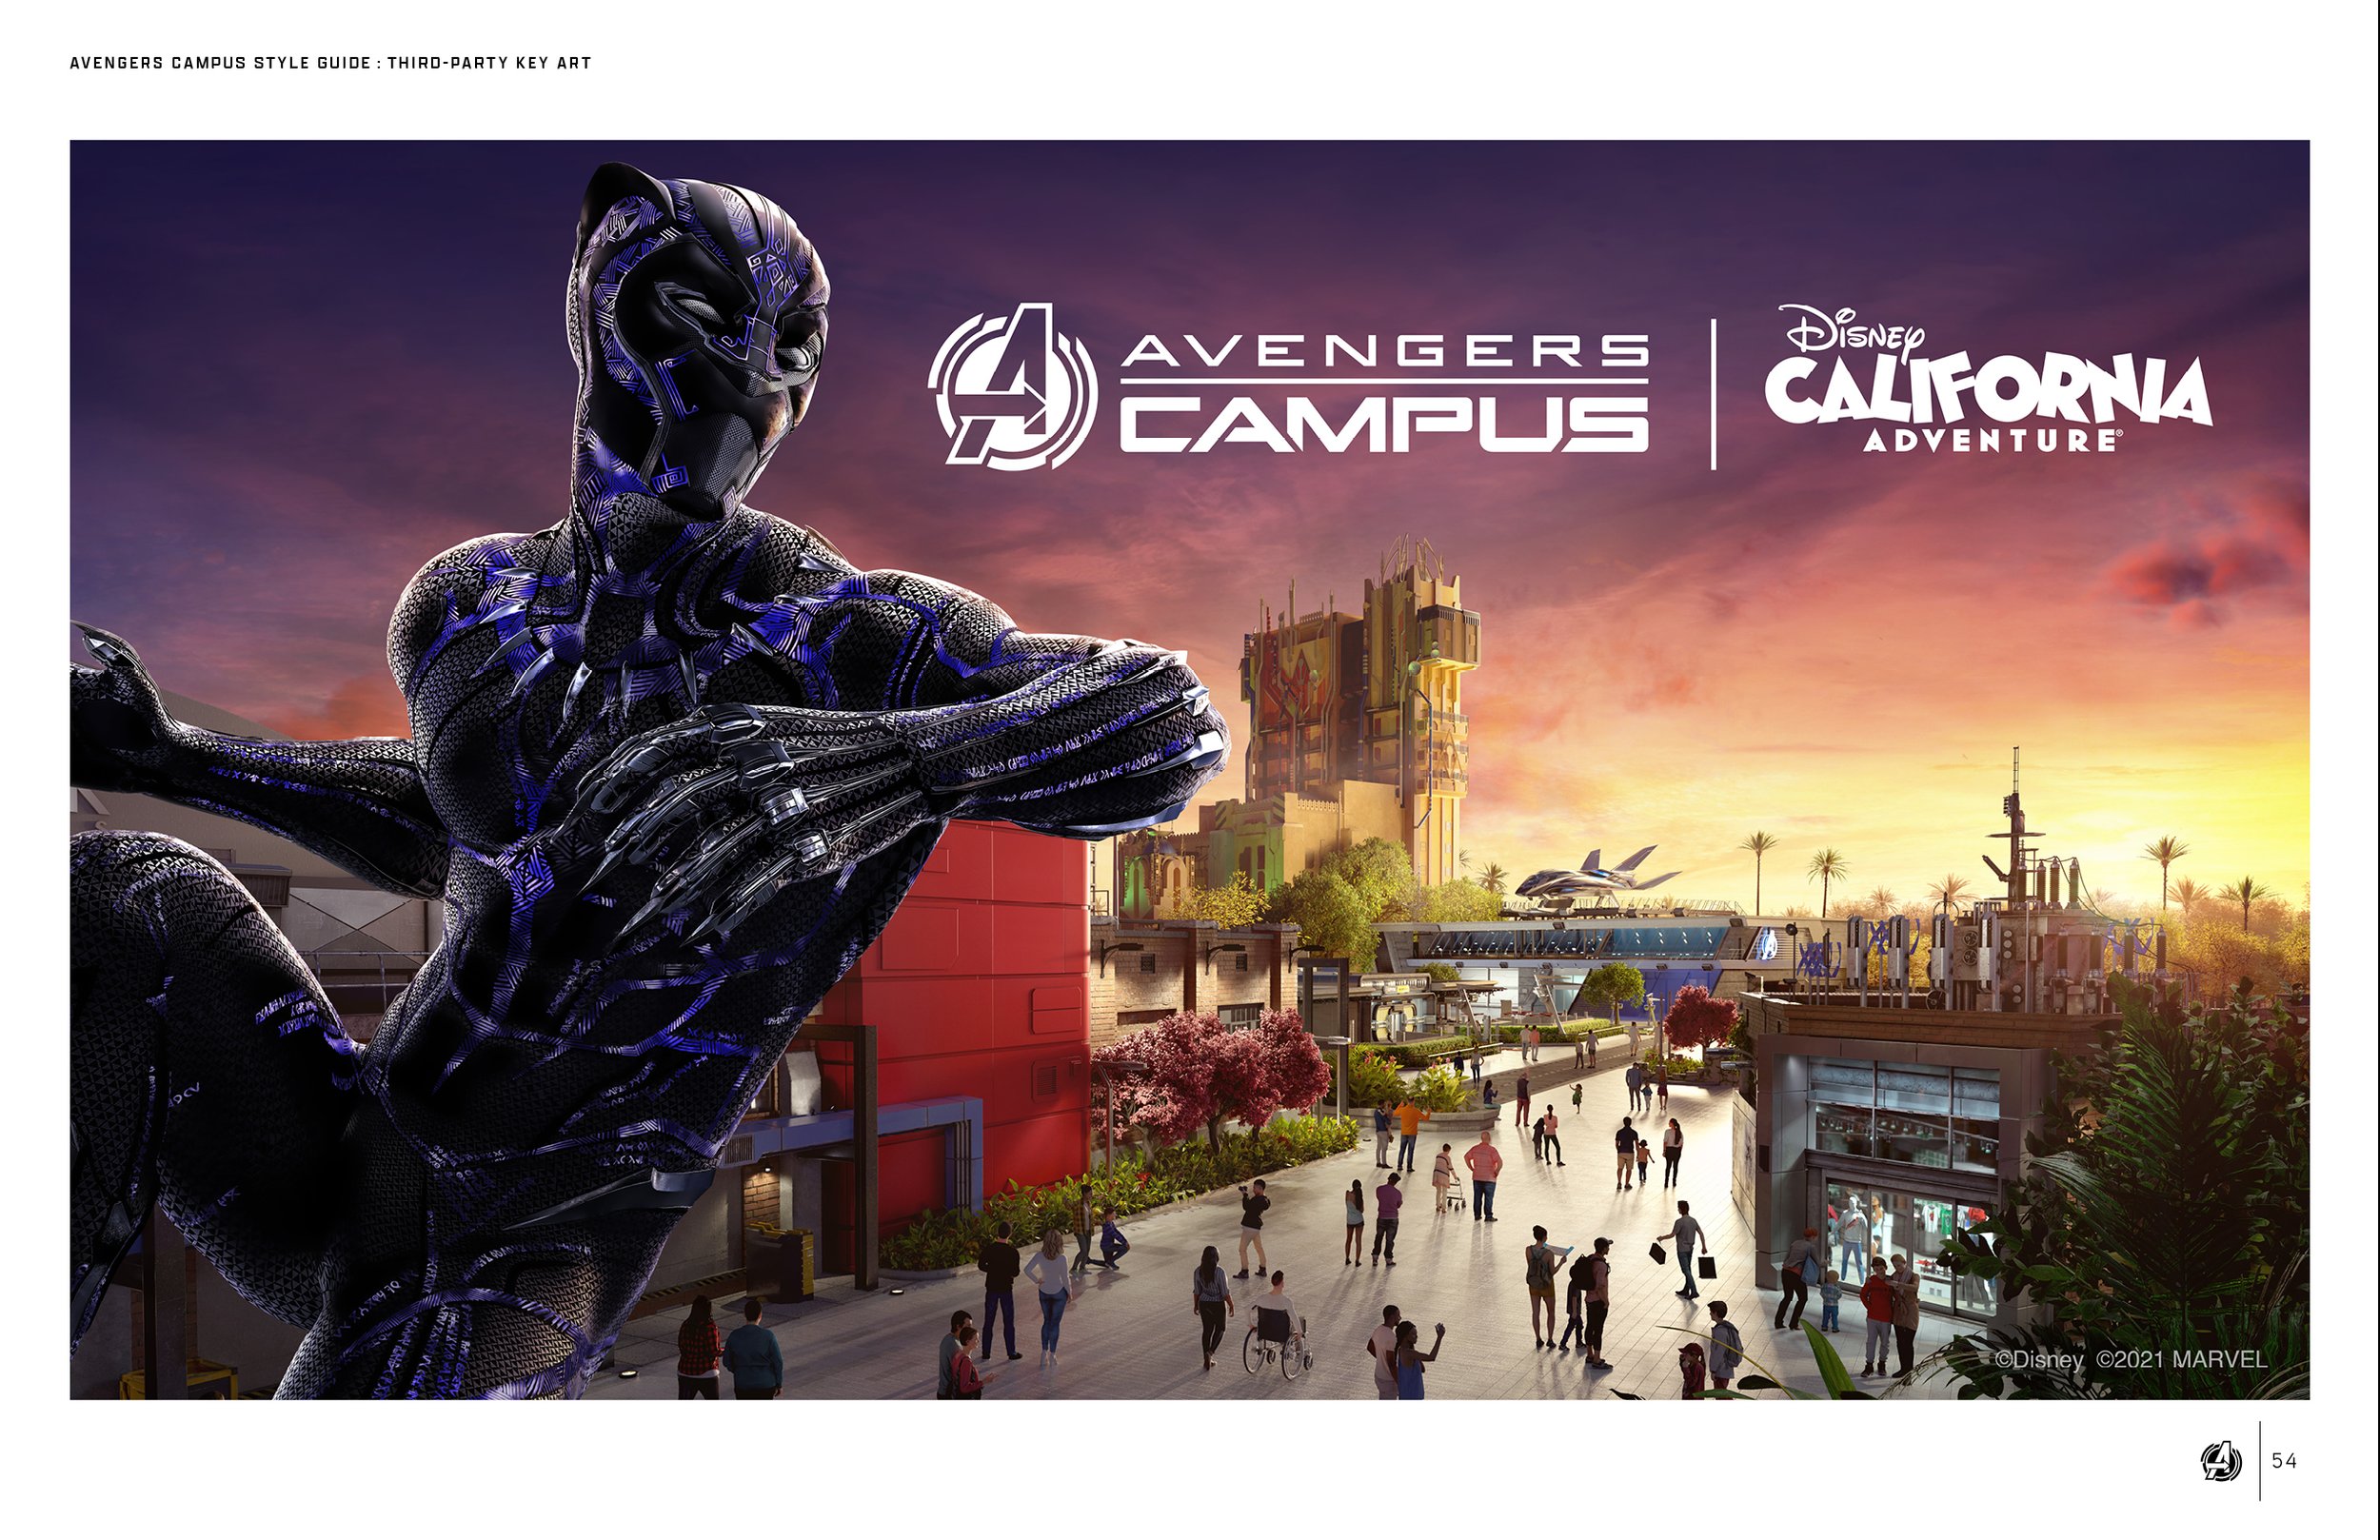 AvengersCampus_StyleGuide_Website_54.jpg